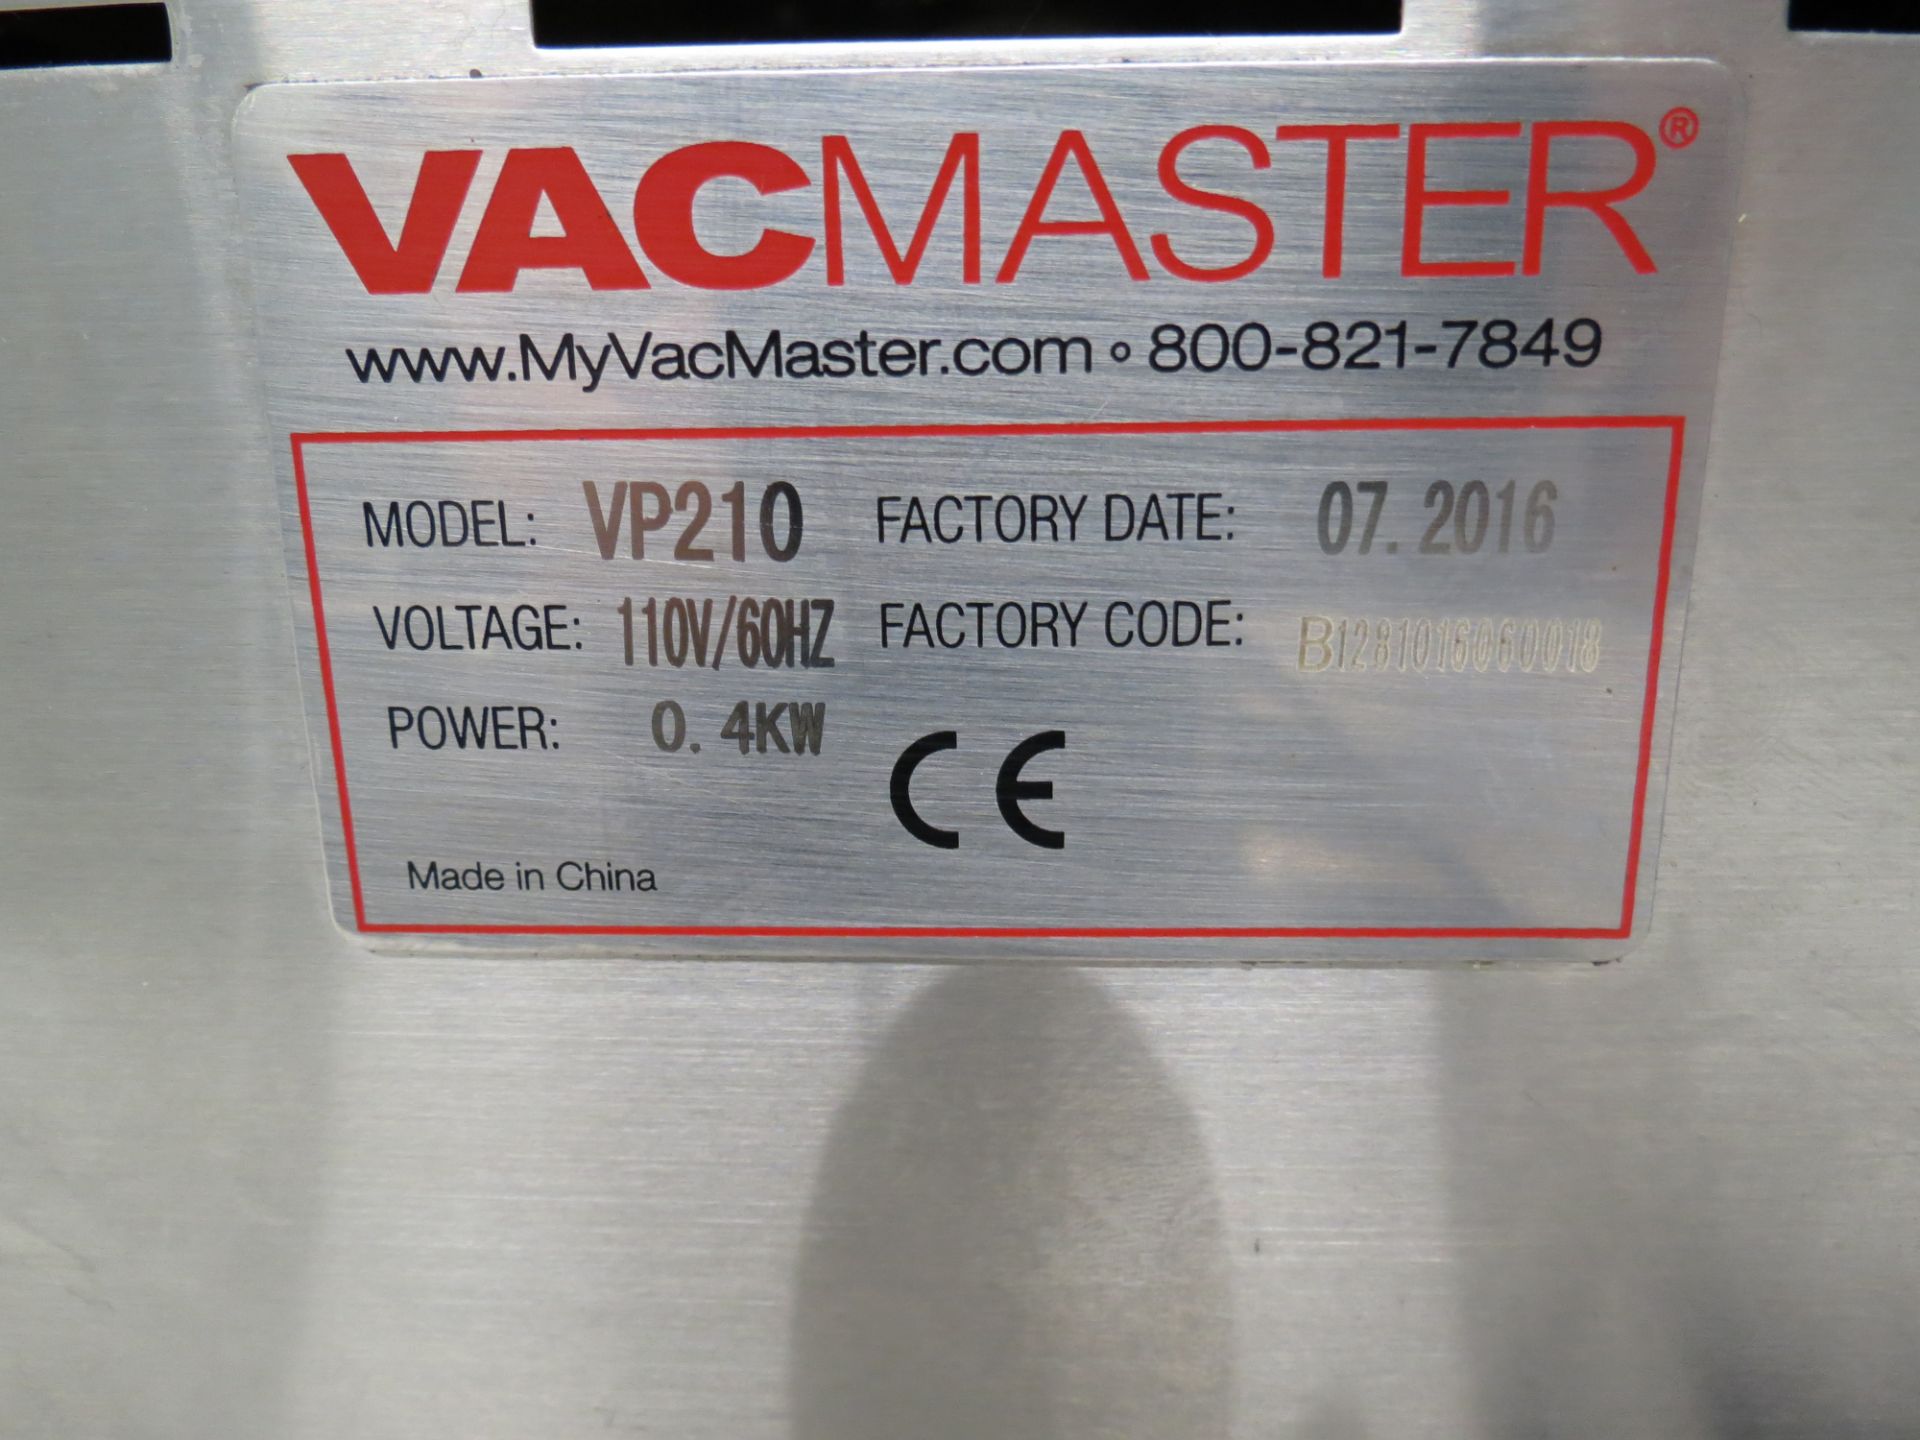 2016 Vacmaster Model VP210 Chamber Vacuum Sealing Machine - Image 2 of 2